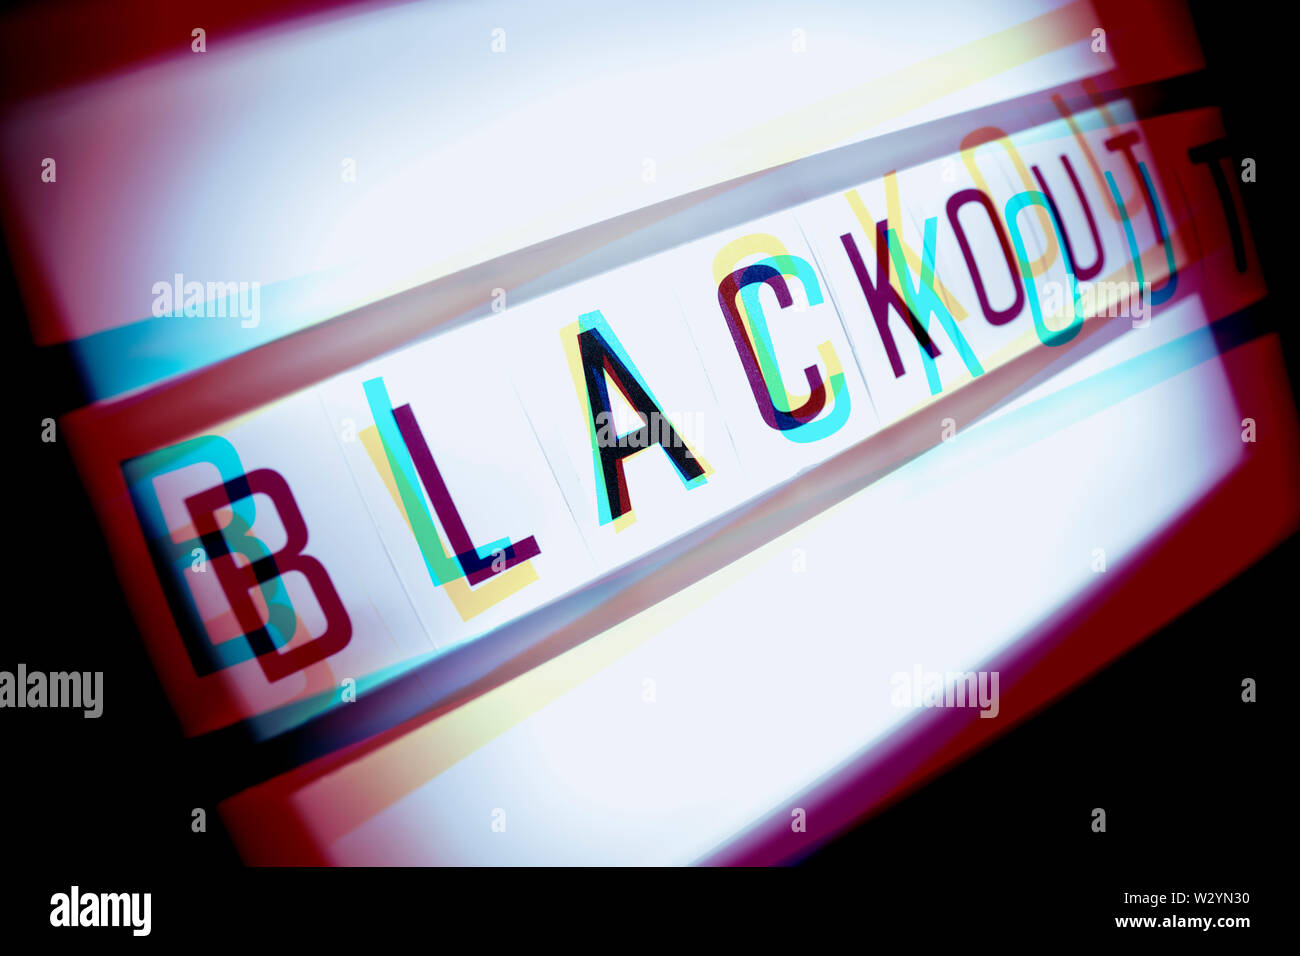 The word blackout on an illuminated panel, power failure Stock Photo